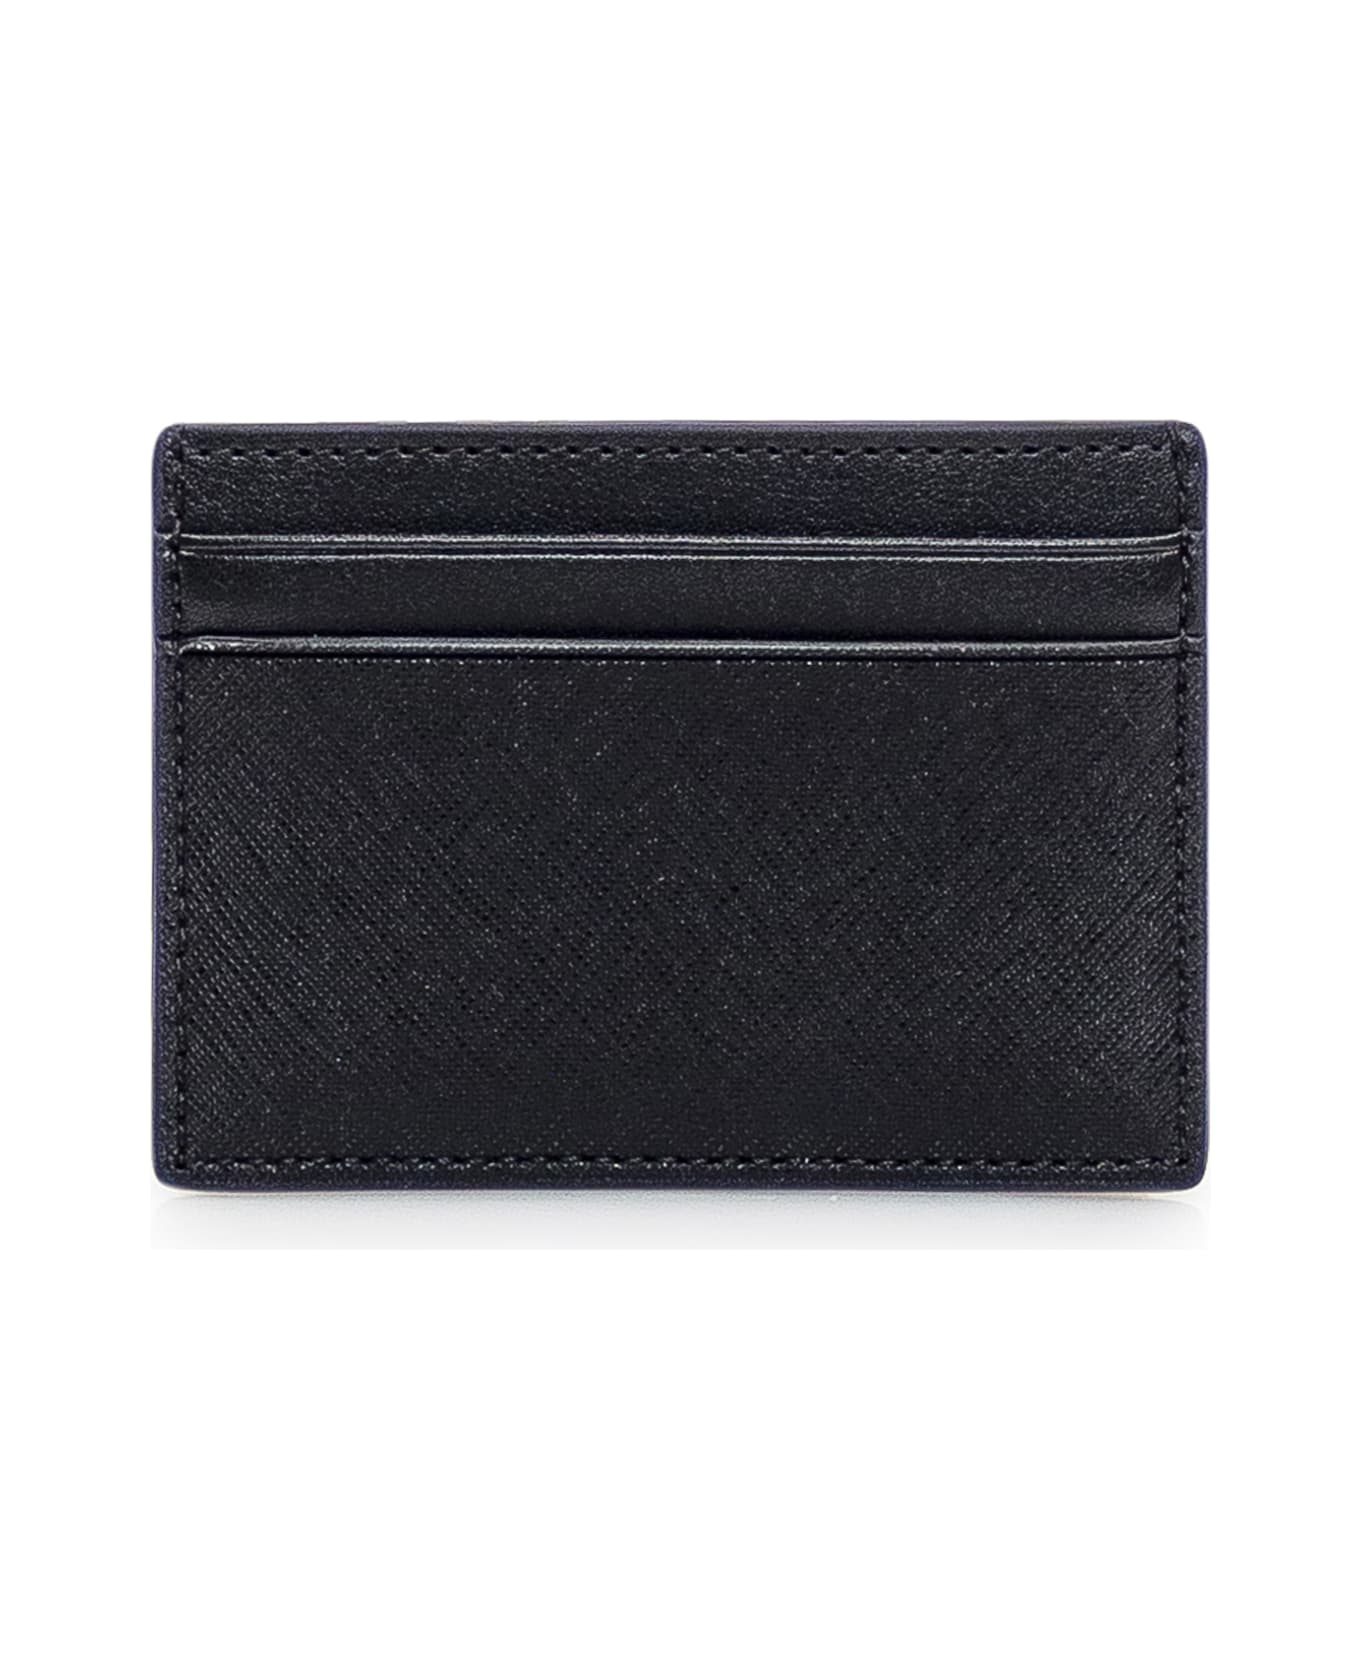 Bally Leather Card Holder - BLACK